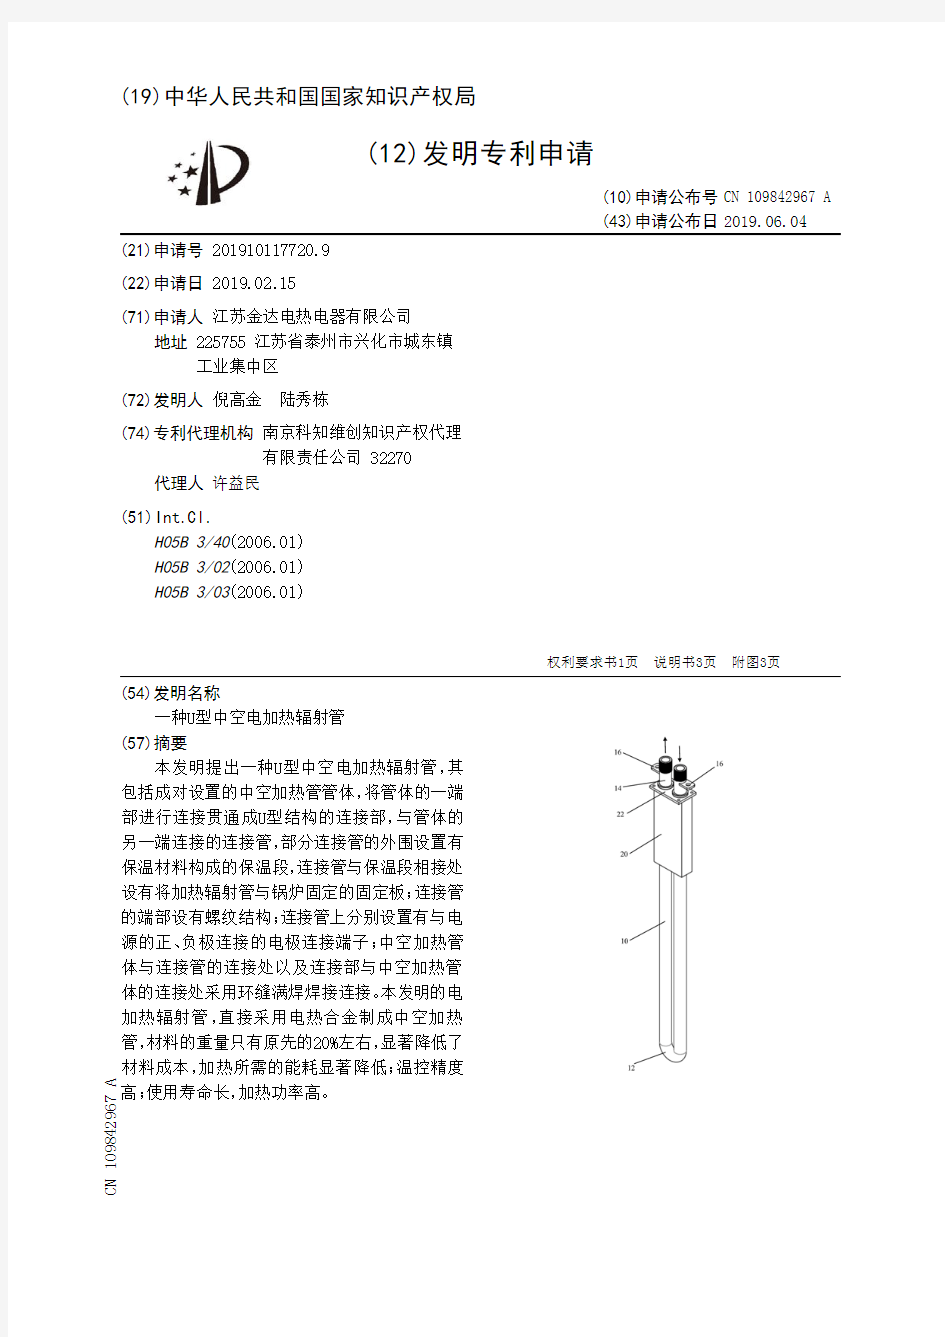 【CN109842967A】一种U型中空电加热辐射管【专利】